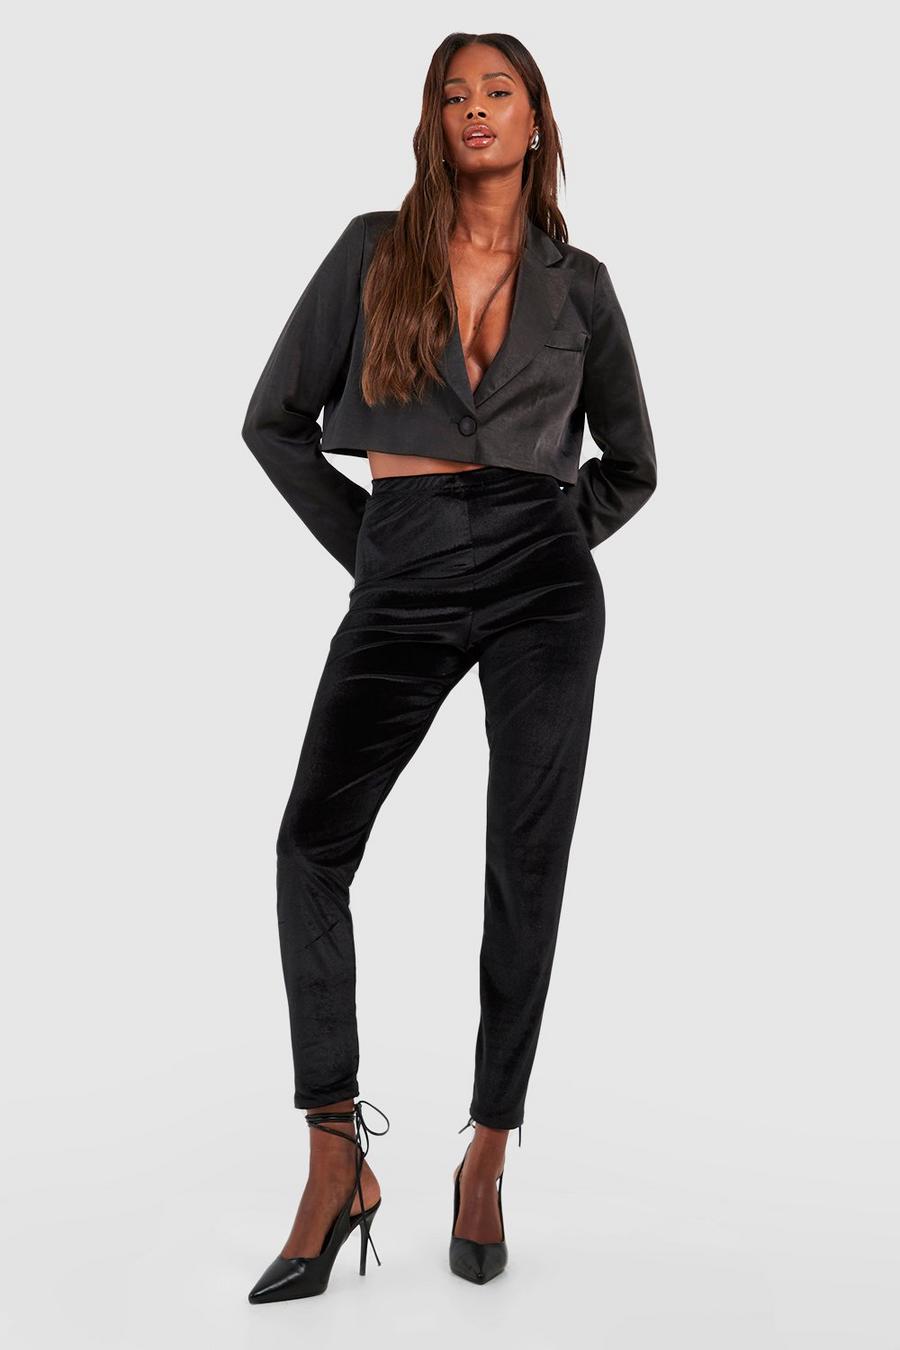 https://media.boohoo.com/i/boohoo/gzz71428_black_xl/female-black-velvet-high-waisted-leggings/?w=900&qlt=default&fmt.jp2.qlt=70&fmt=auto&sm=fit